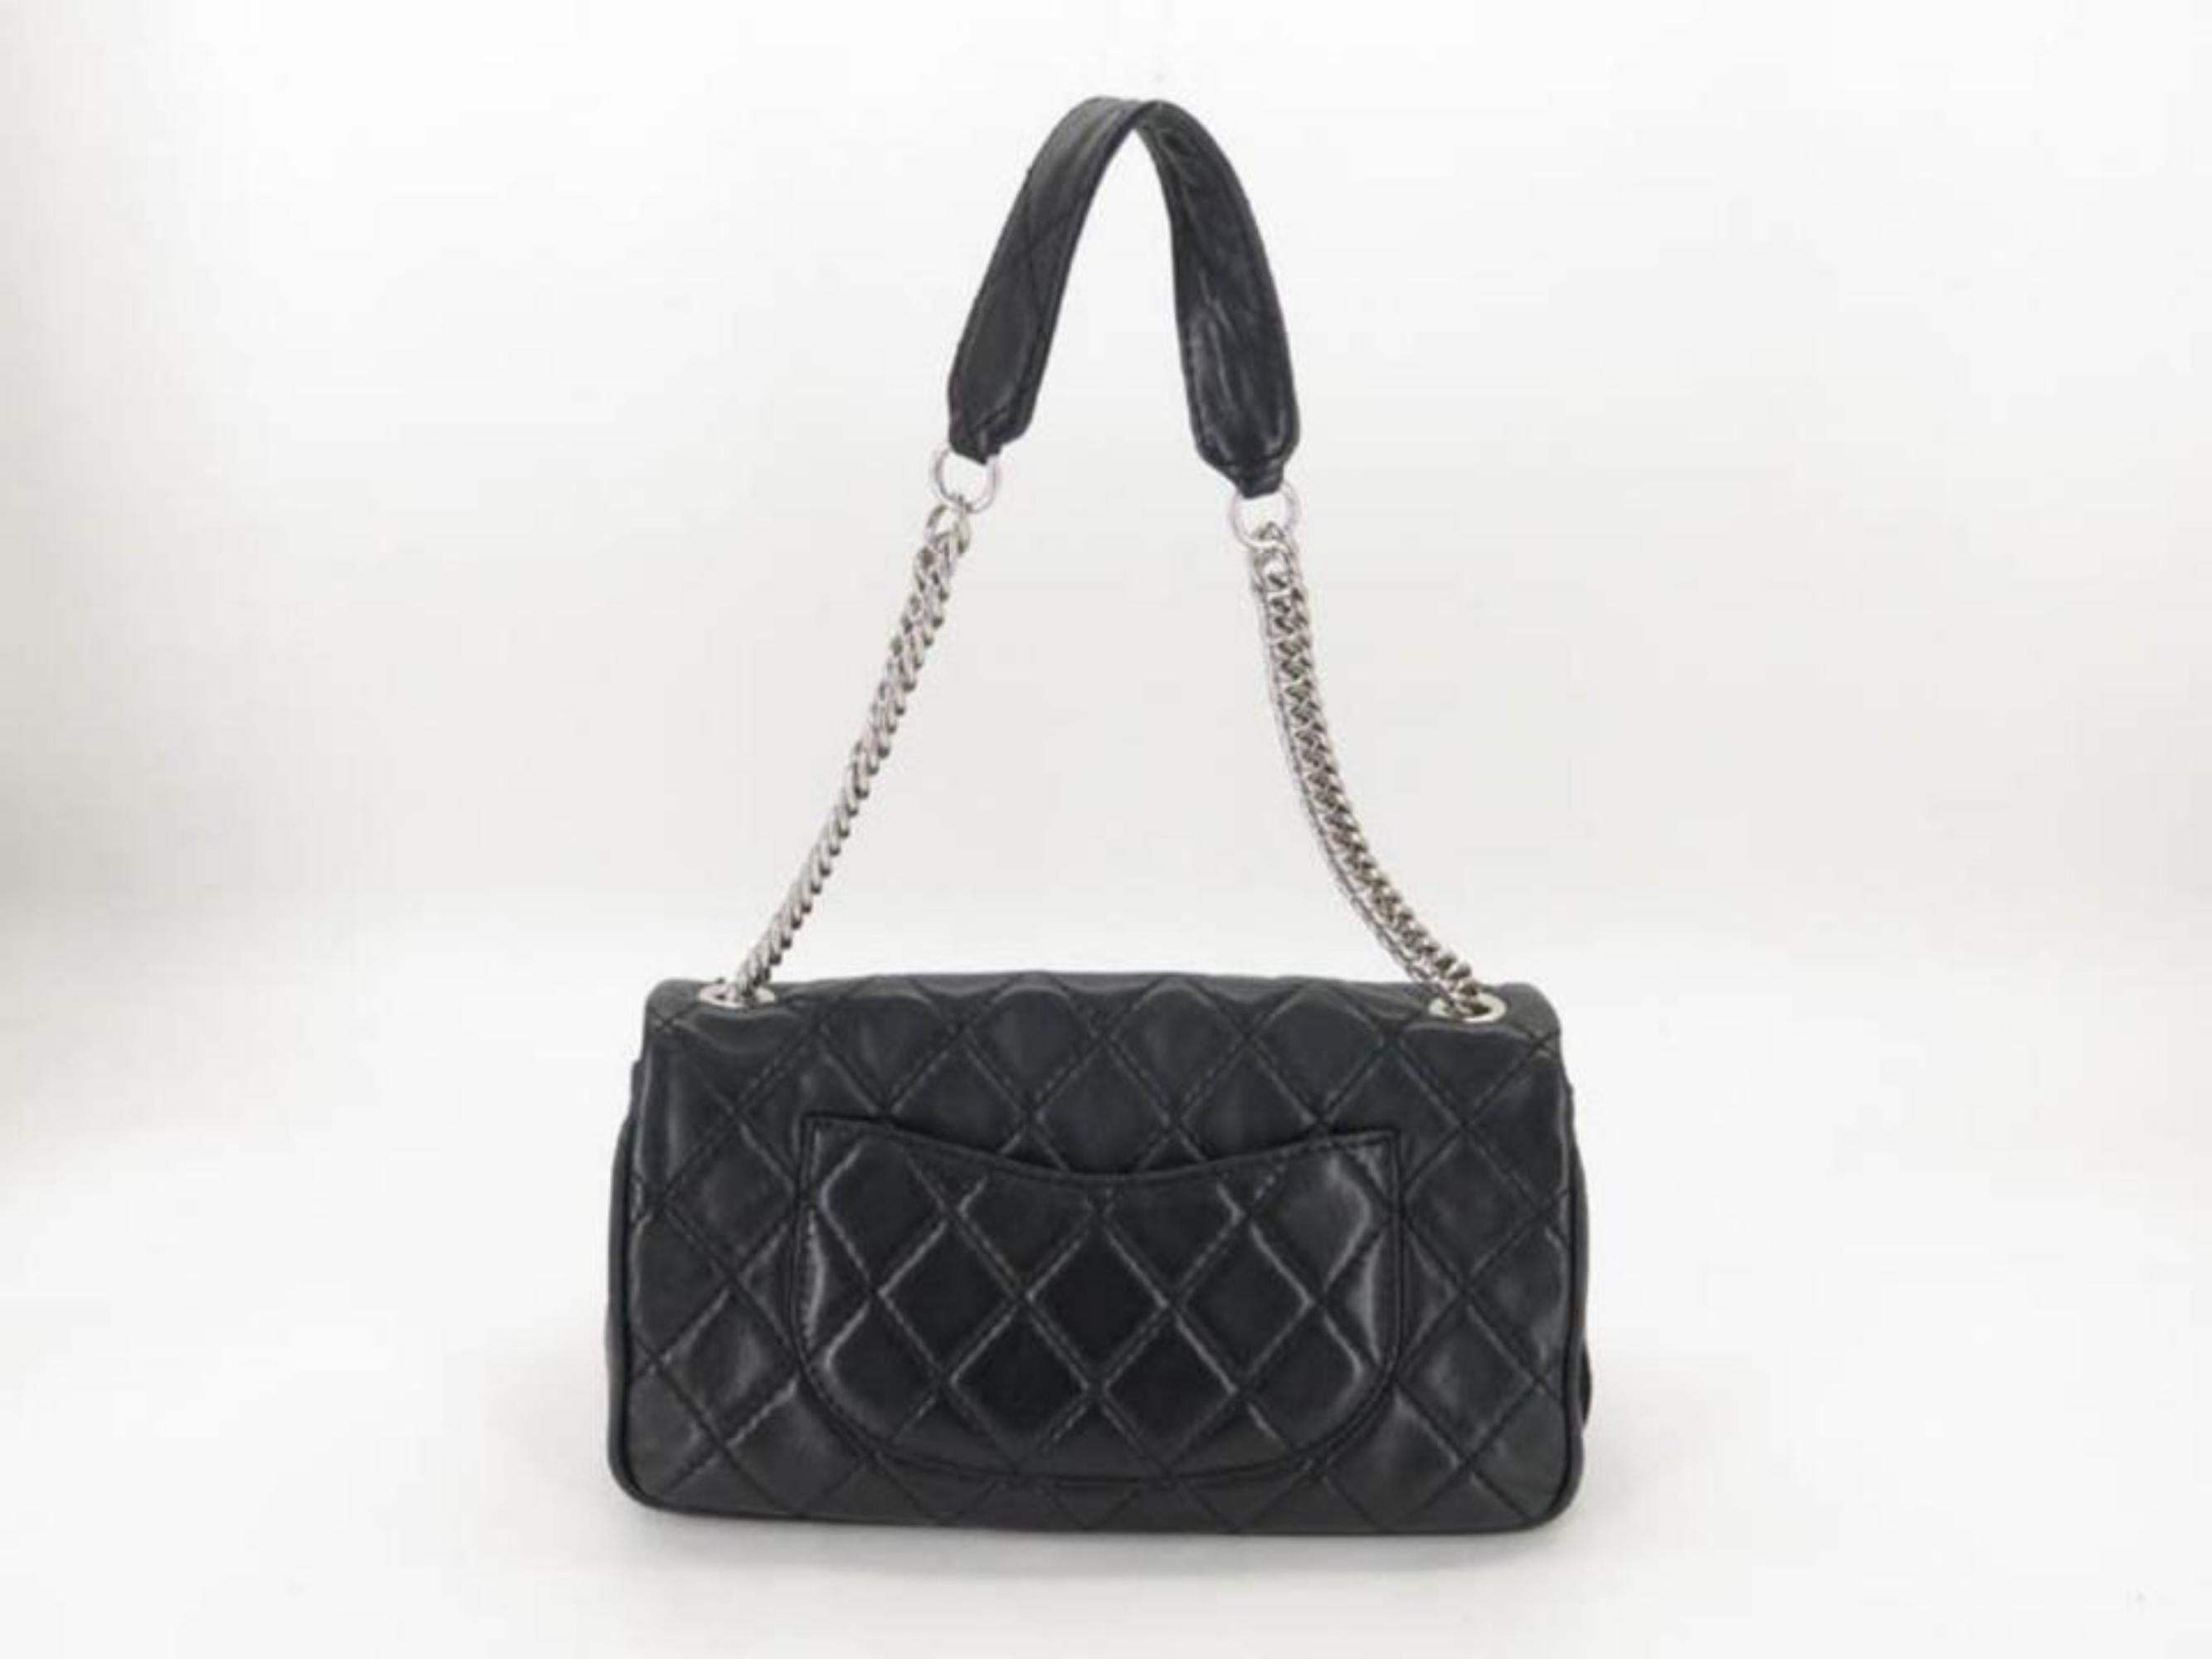 Chanel Large Classic Quilted Matelasse Flap 867200 Black Leather Shoulder Bag For Sale 4